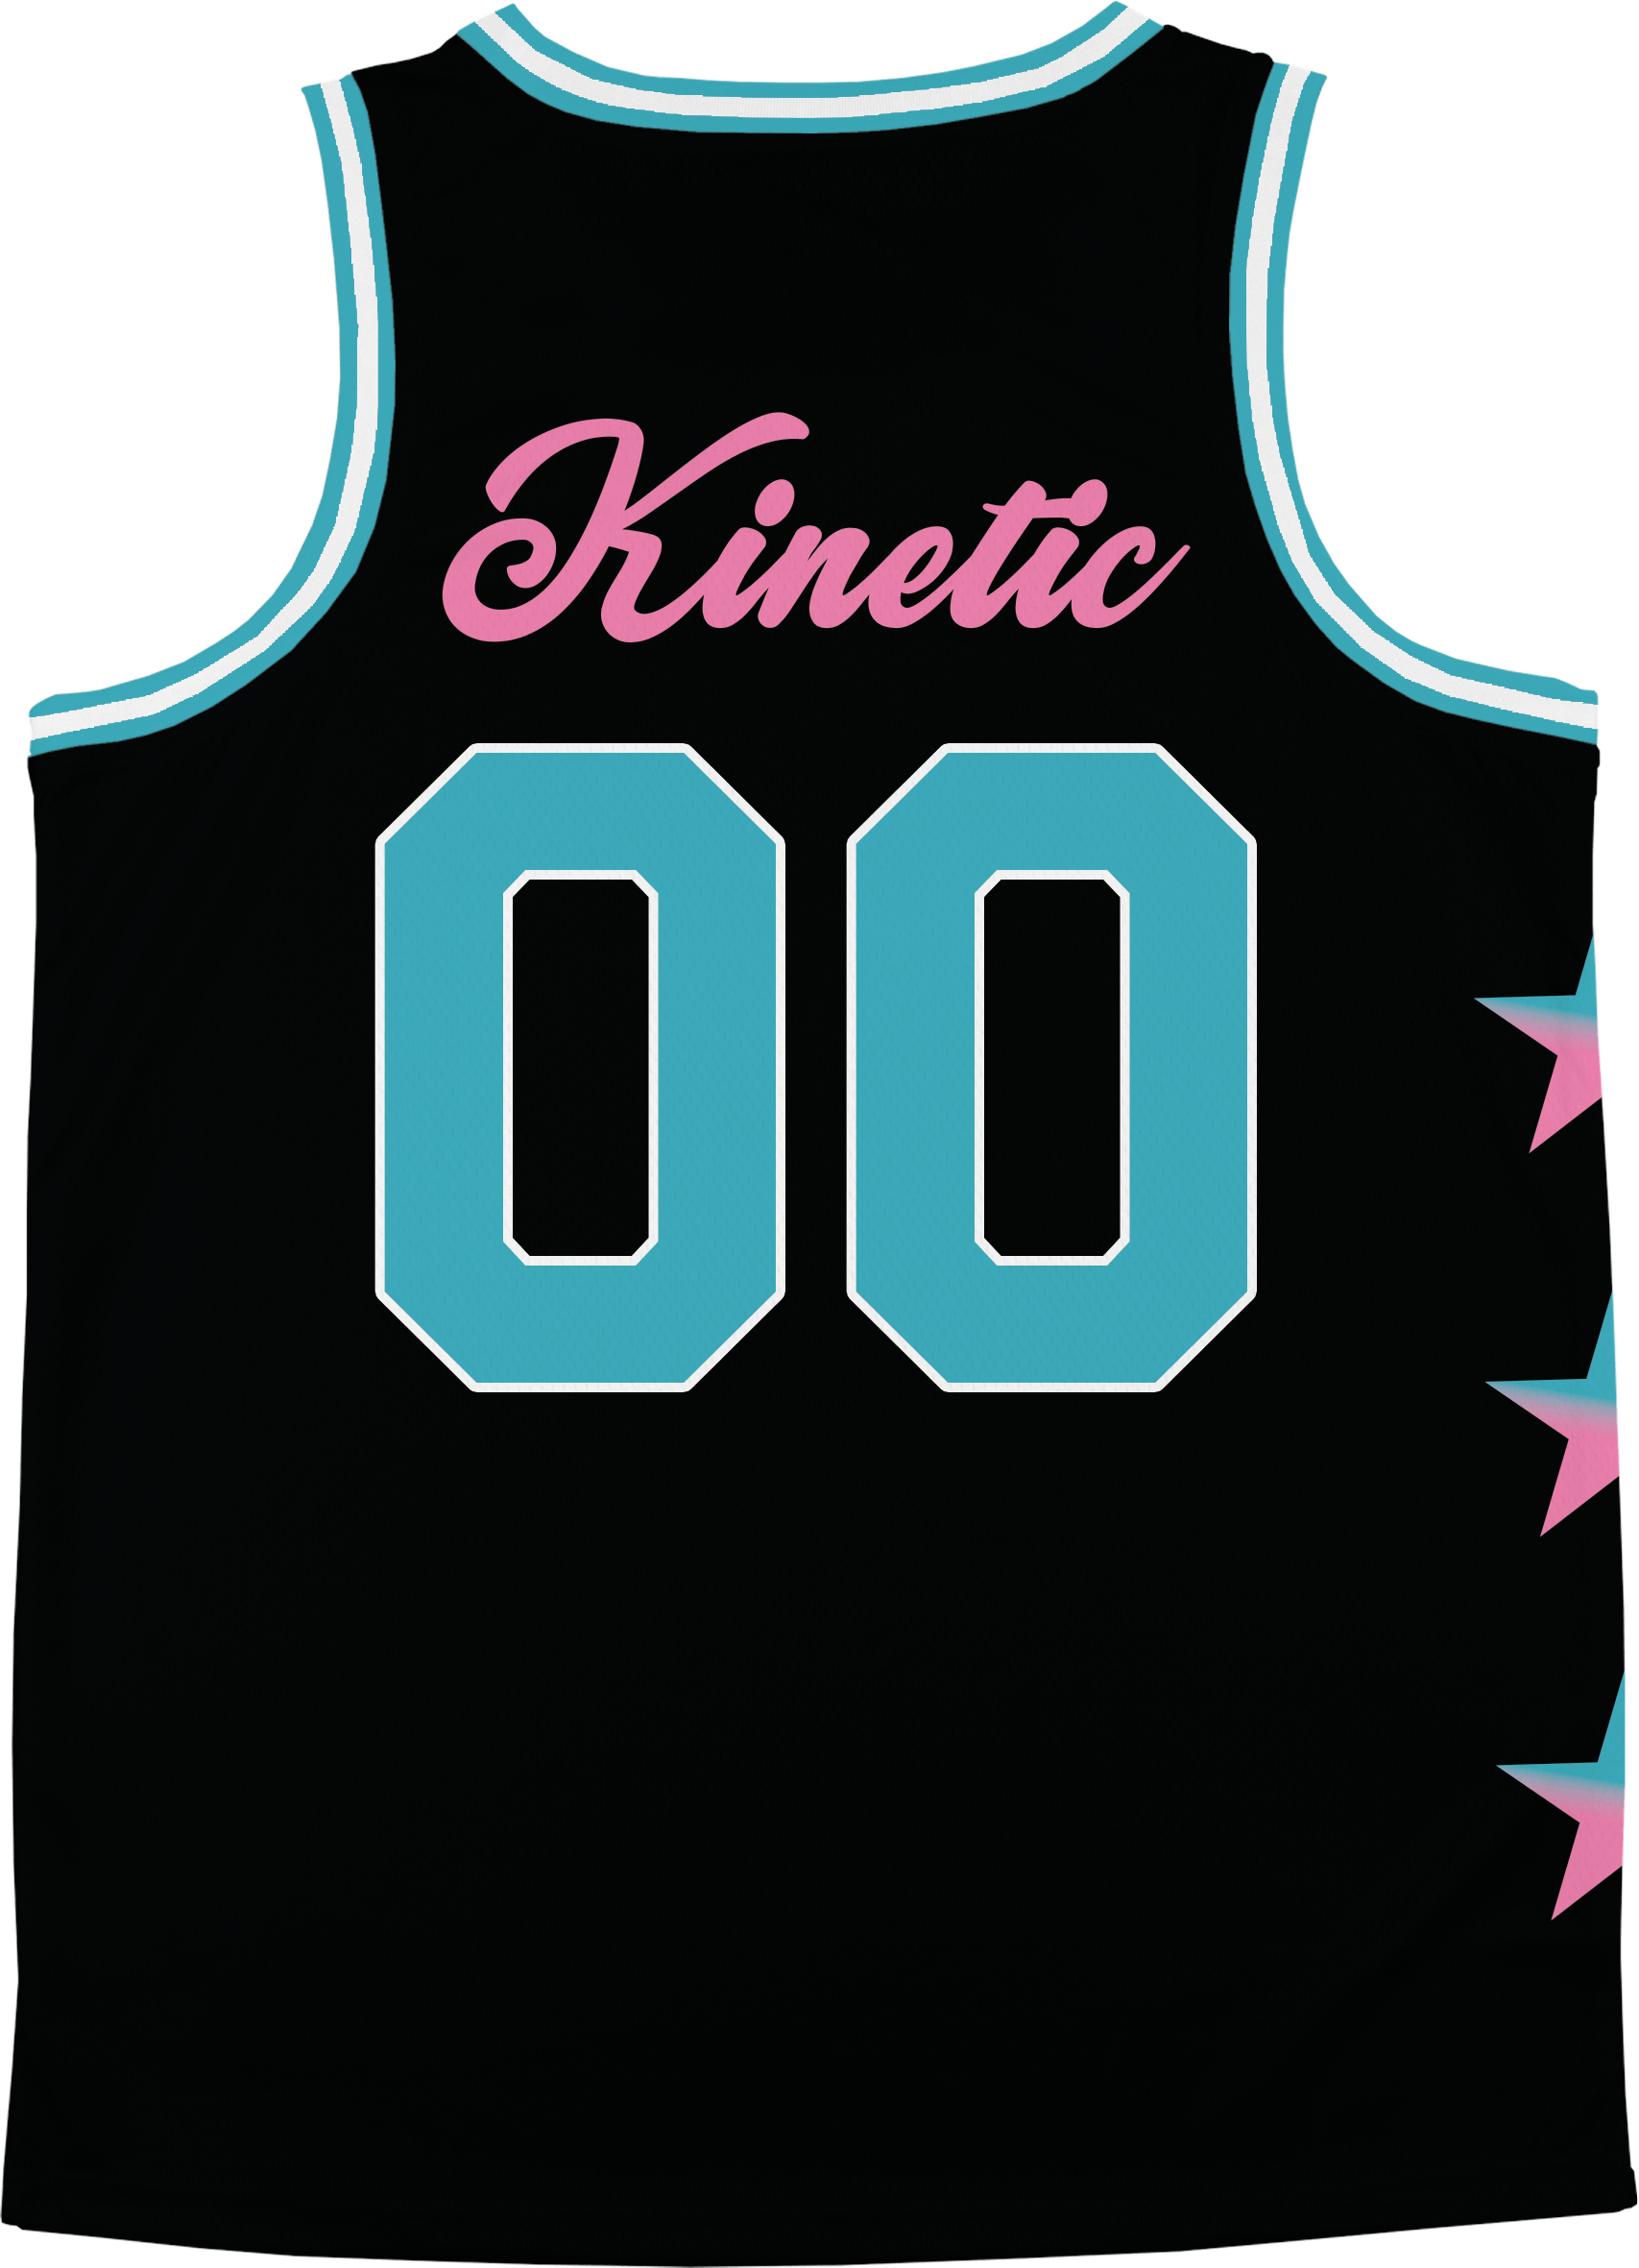 Acacia - Cotton Candy Basketball Jersey Premium Basketball Kinetic Society LLC 